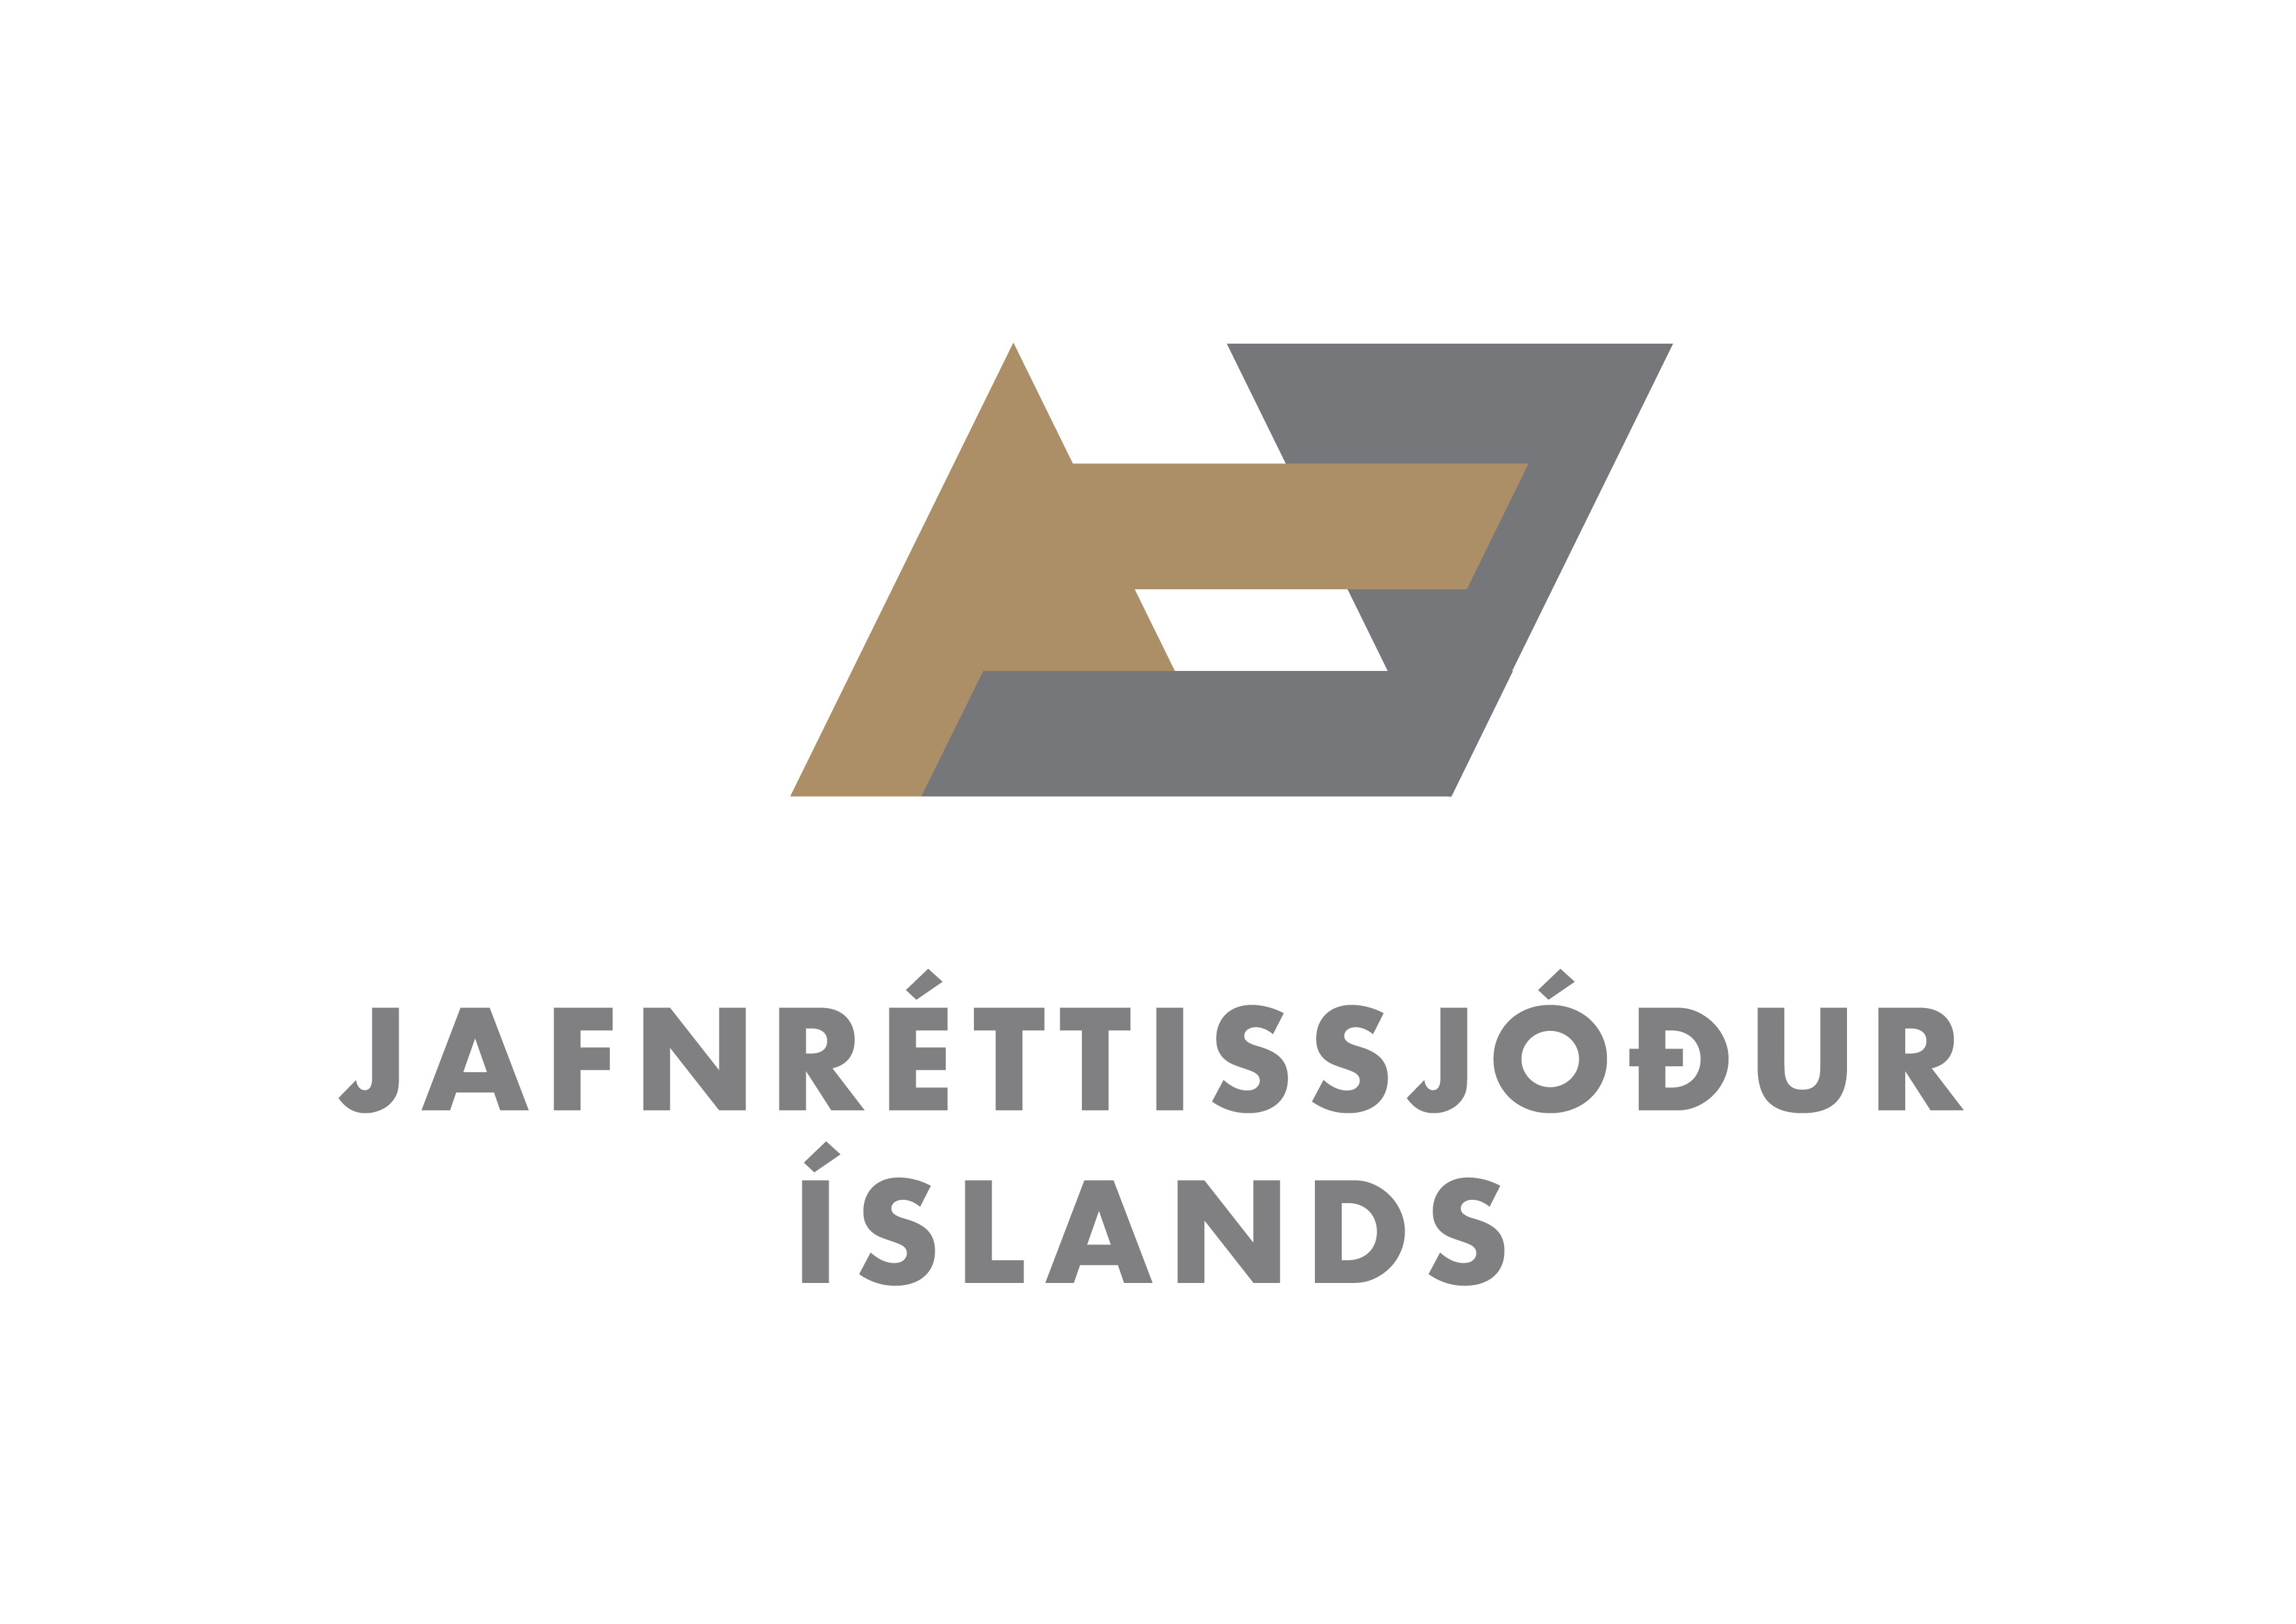 Jafnrettissjodur-islands-logo-prent